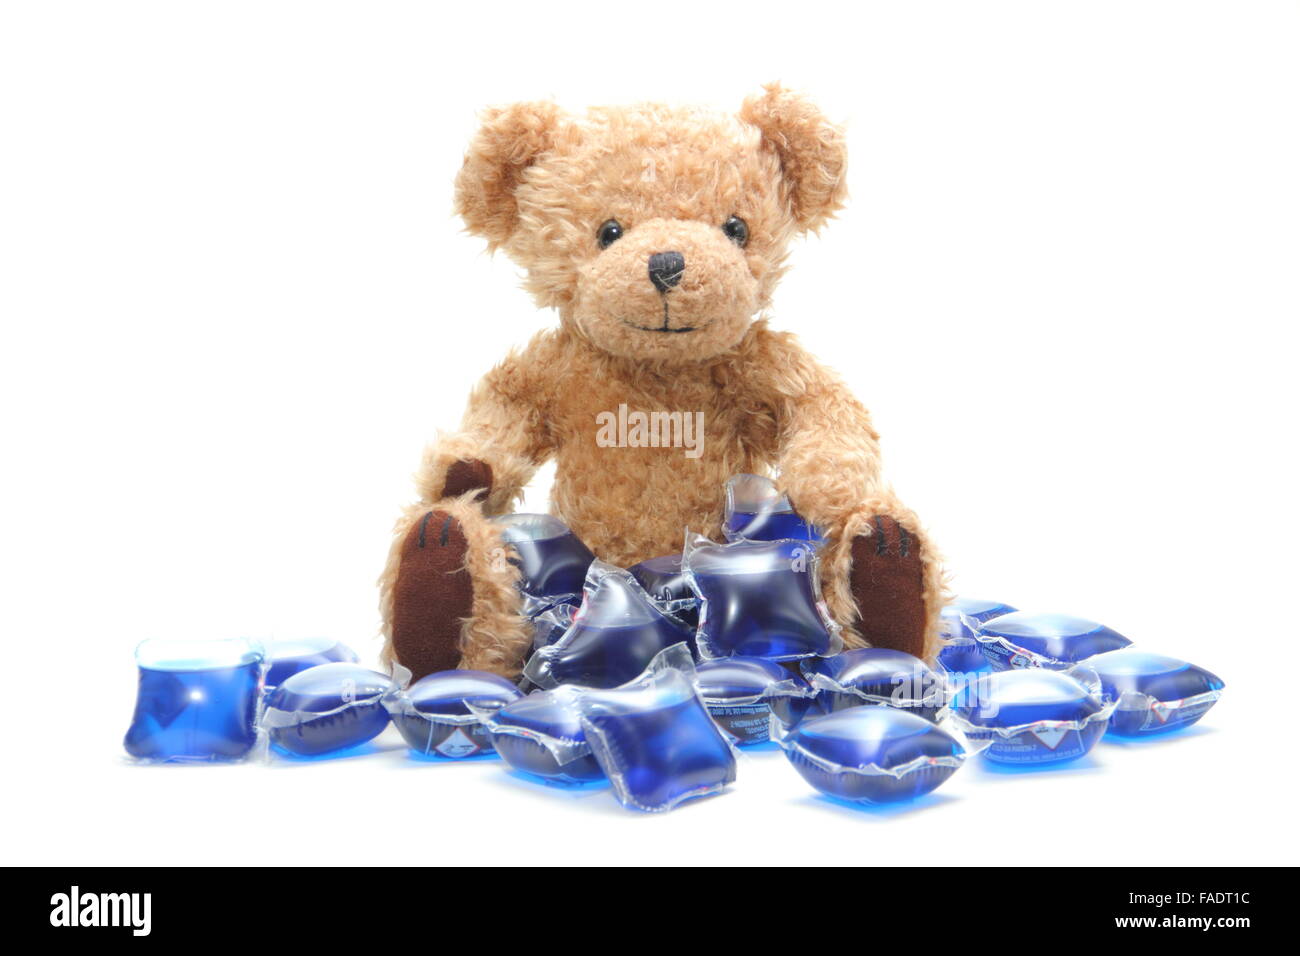 Liquid laundry detergent capsules surround a child's teddy bear - UK Stock Photo